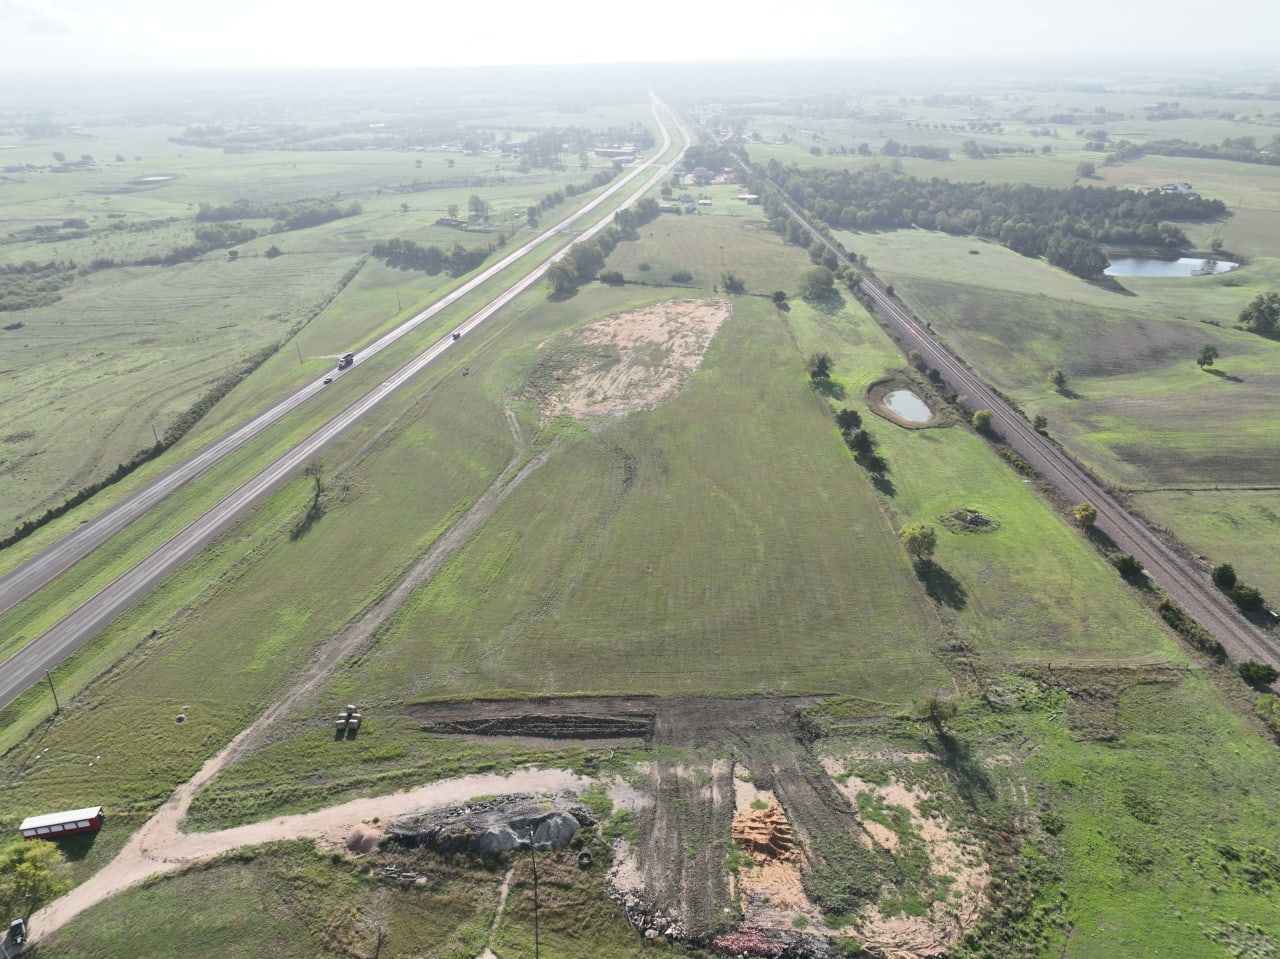 6.358-Acre Development-Ready Land on Highway 36 South, Brenham, TX - Tract 2